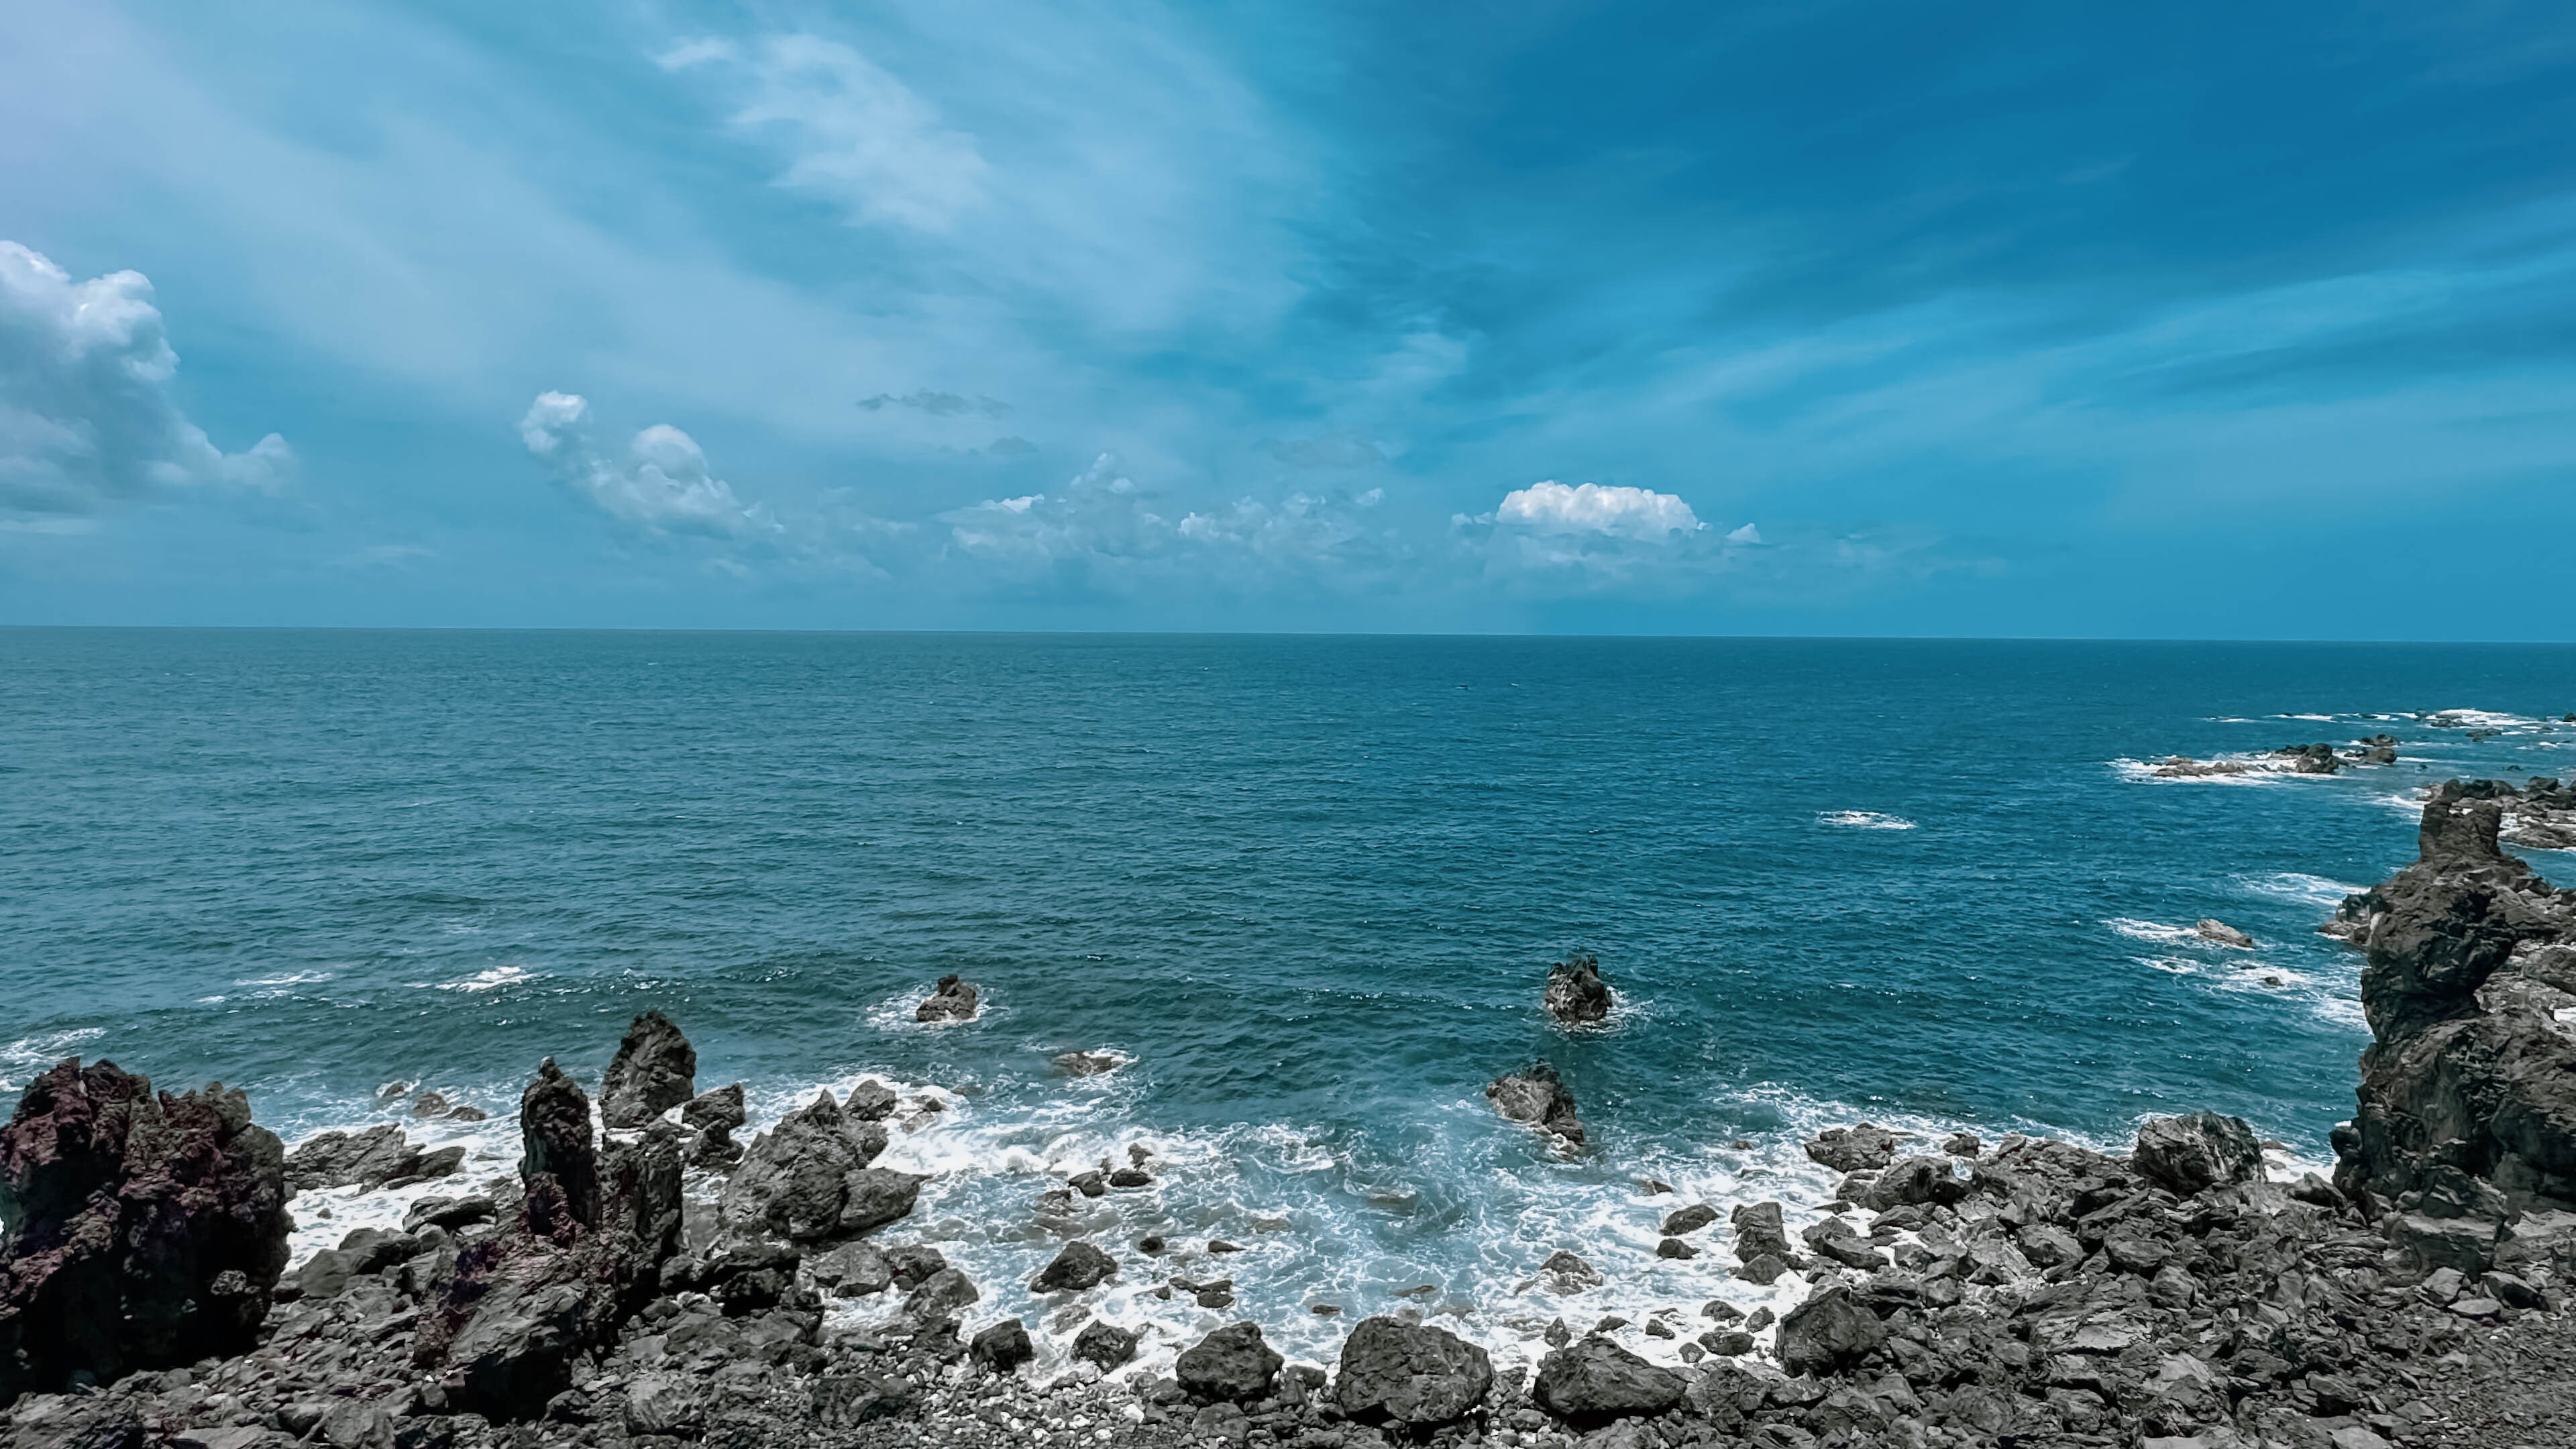 Saint Kitts and Nevis: Black Rocks beach, Saint Kitts island, The Federation of Saint Christopher and Nevis. 3840x2160 4K Wallpaper.